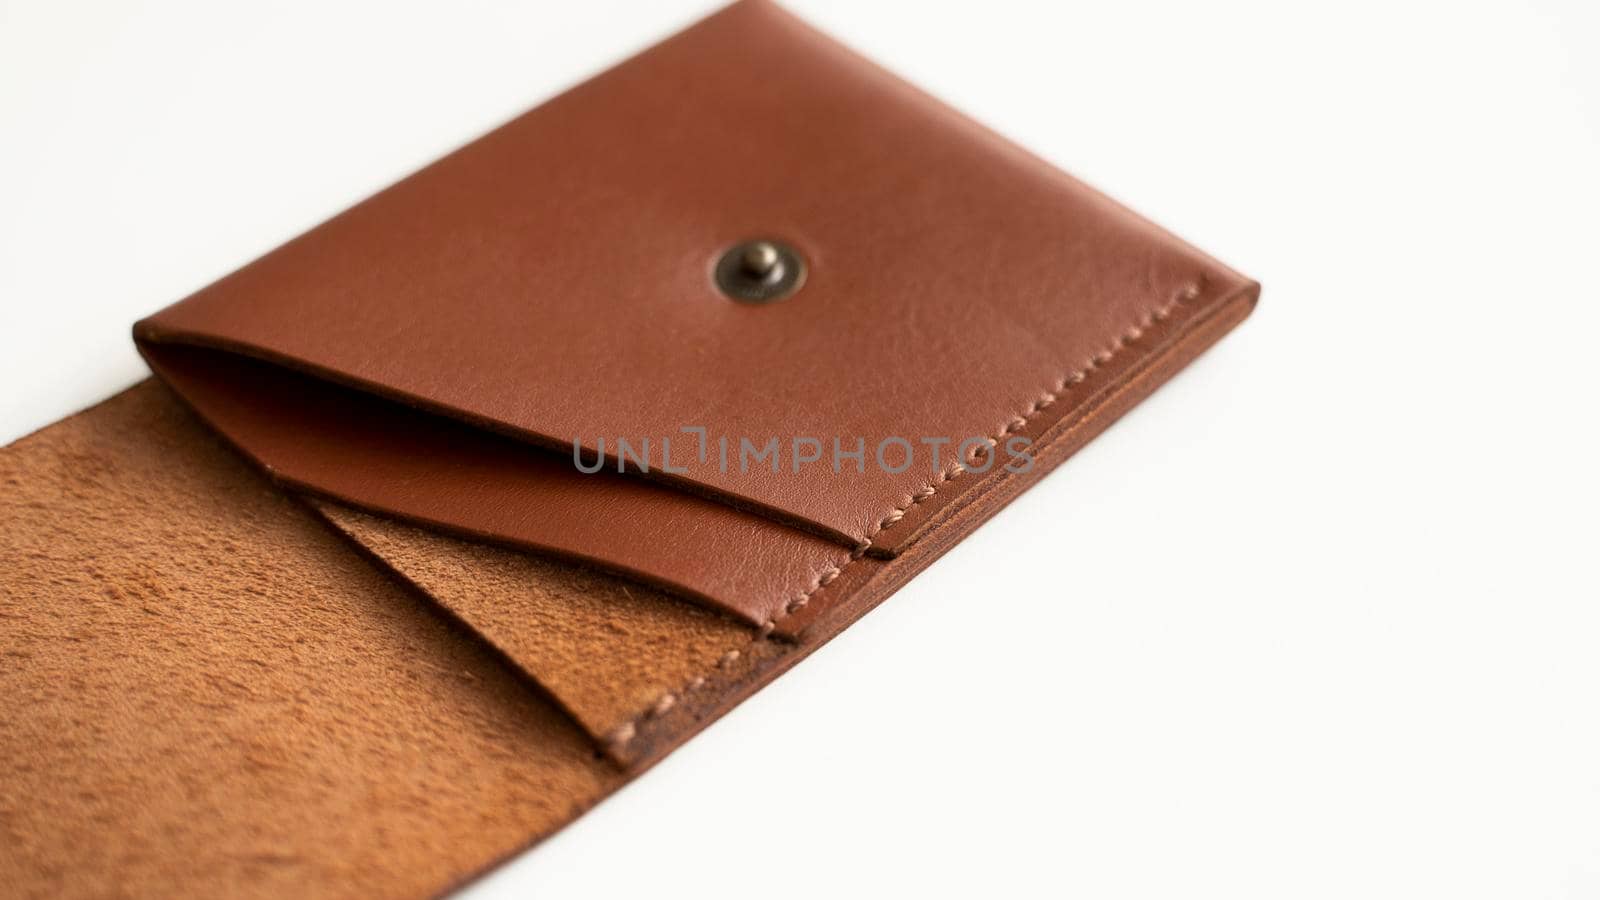 Opened empty orange genuine leather card holder on a white surface